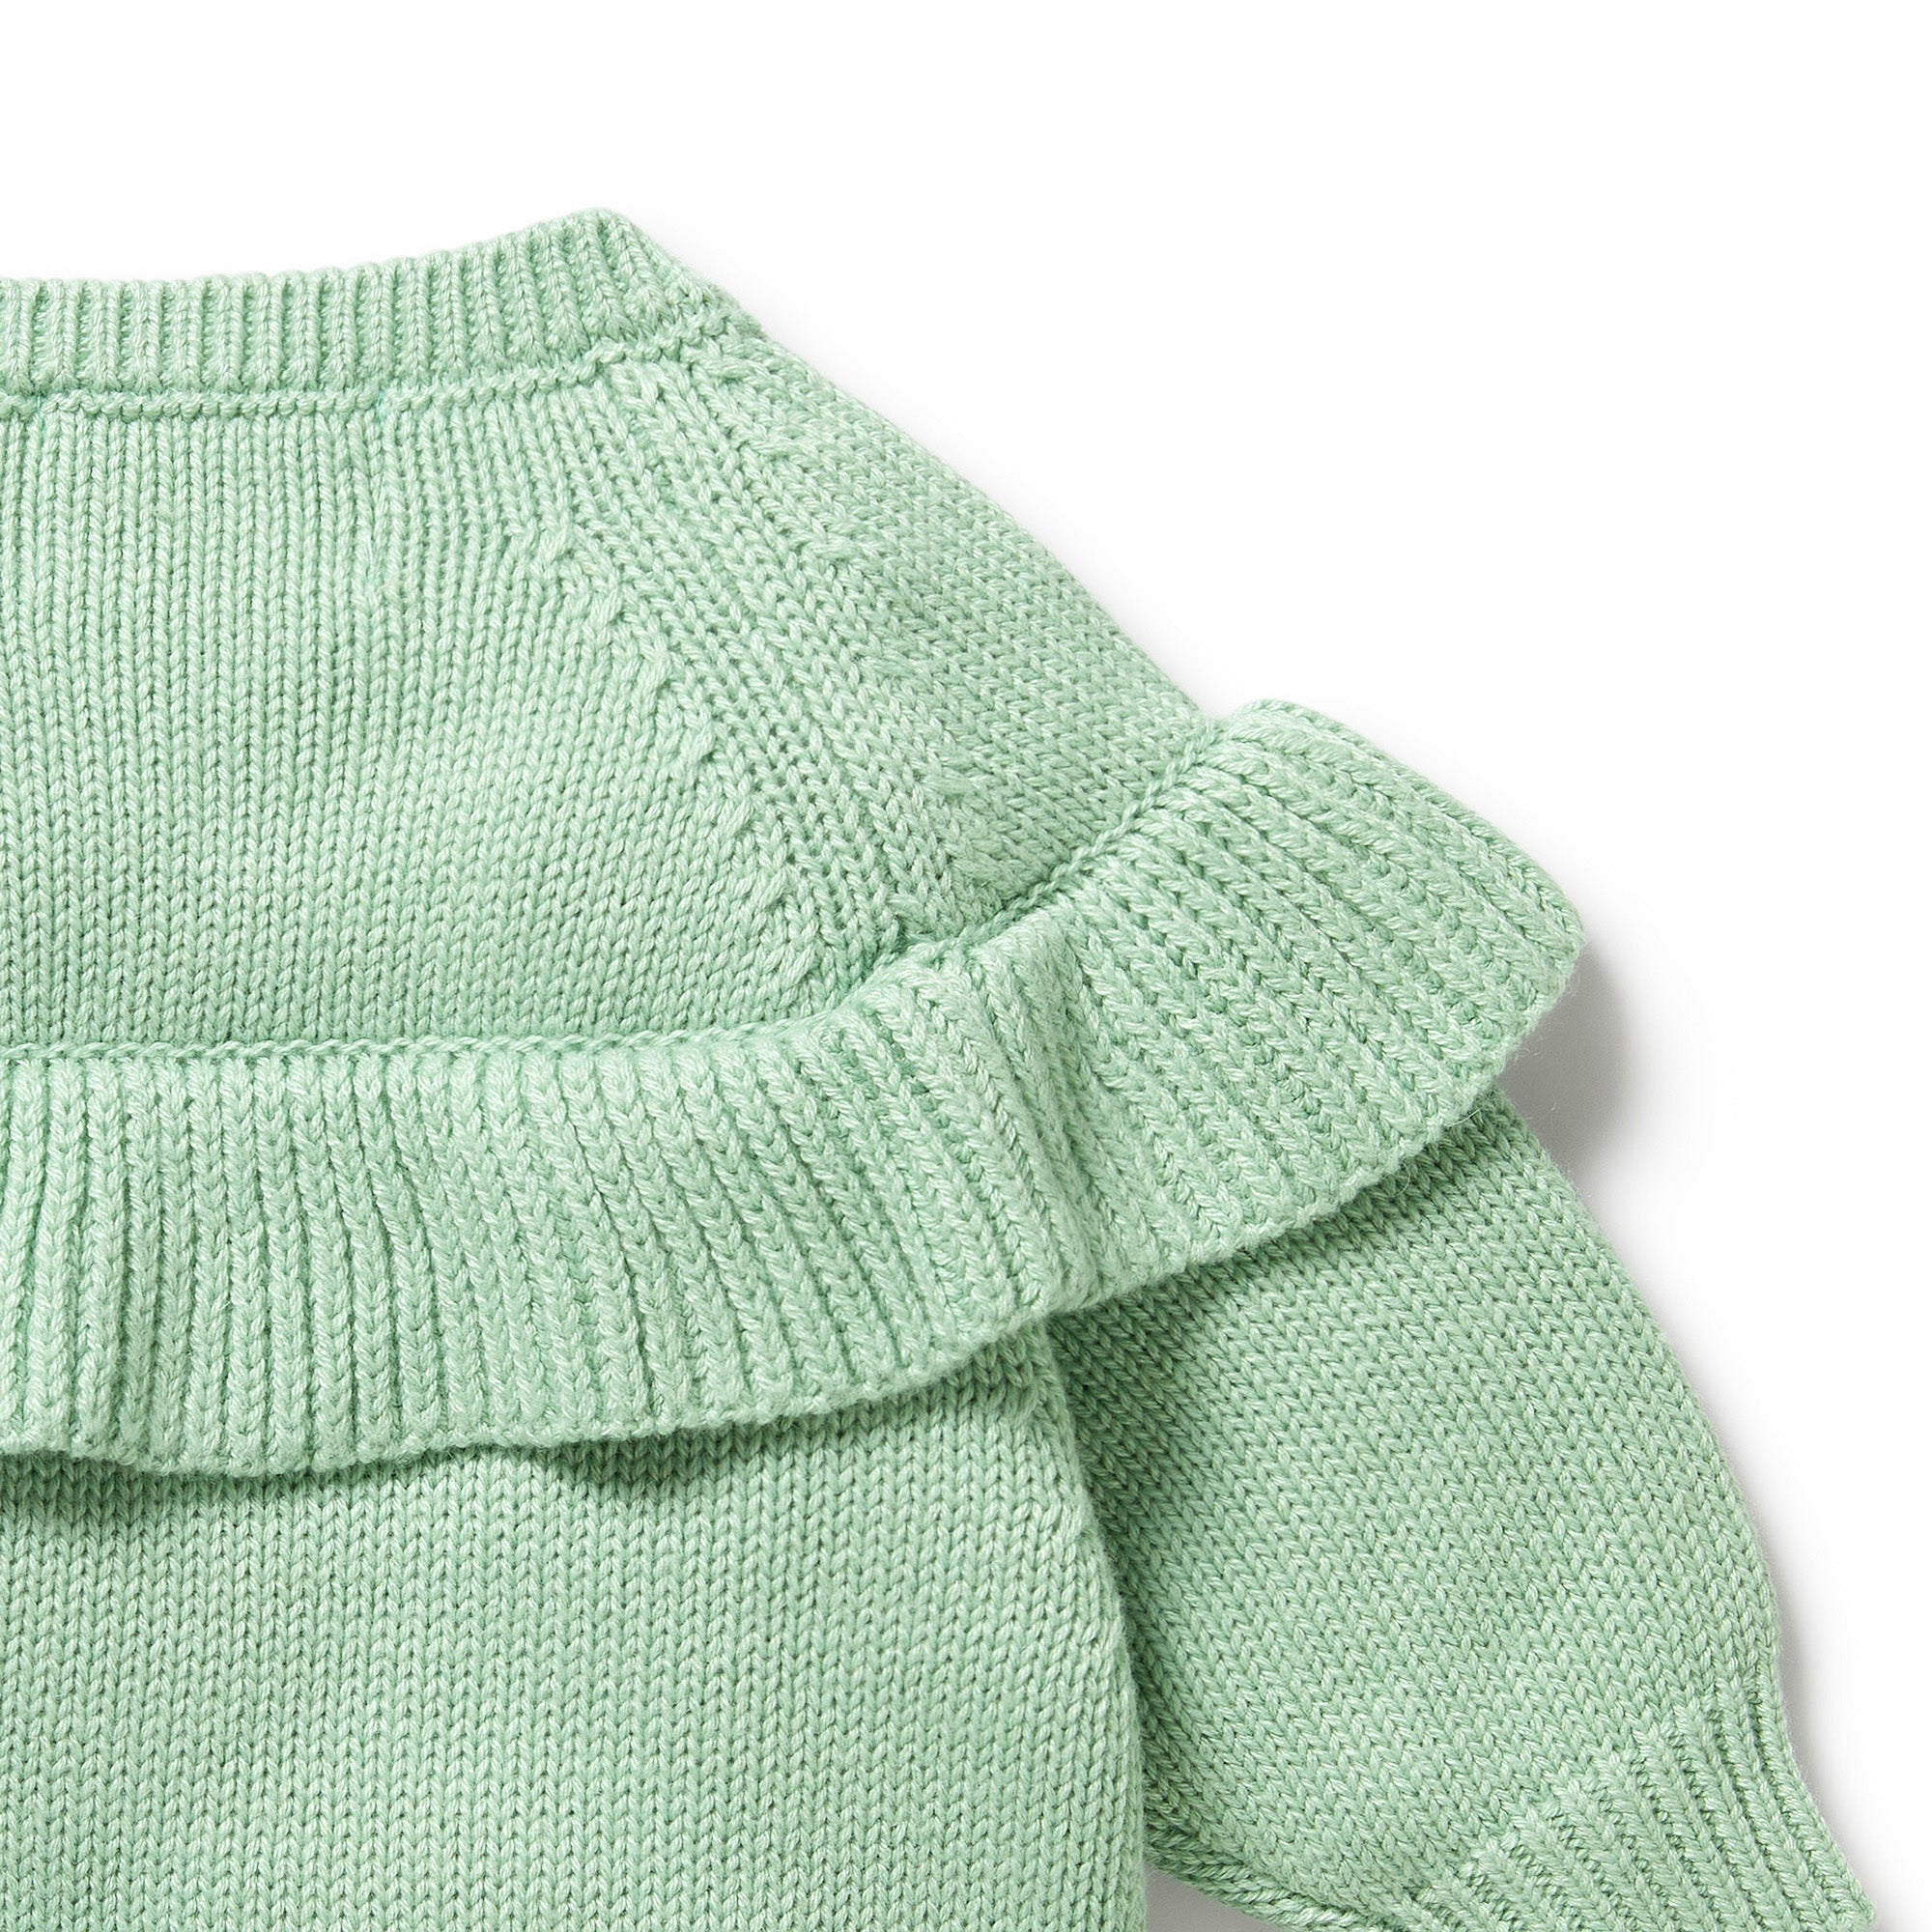 Mint Green Knitted Ruffle Jumper